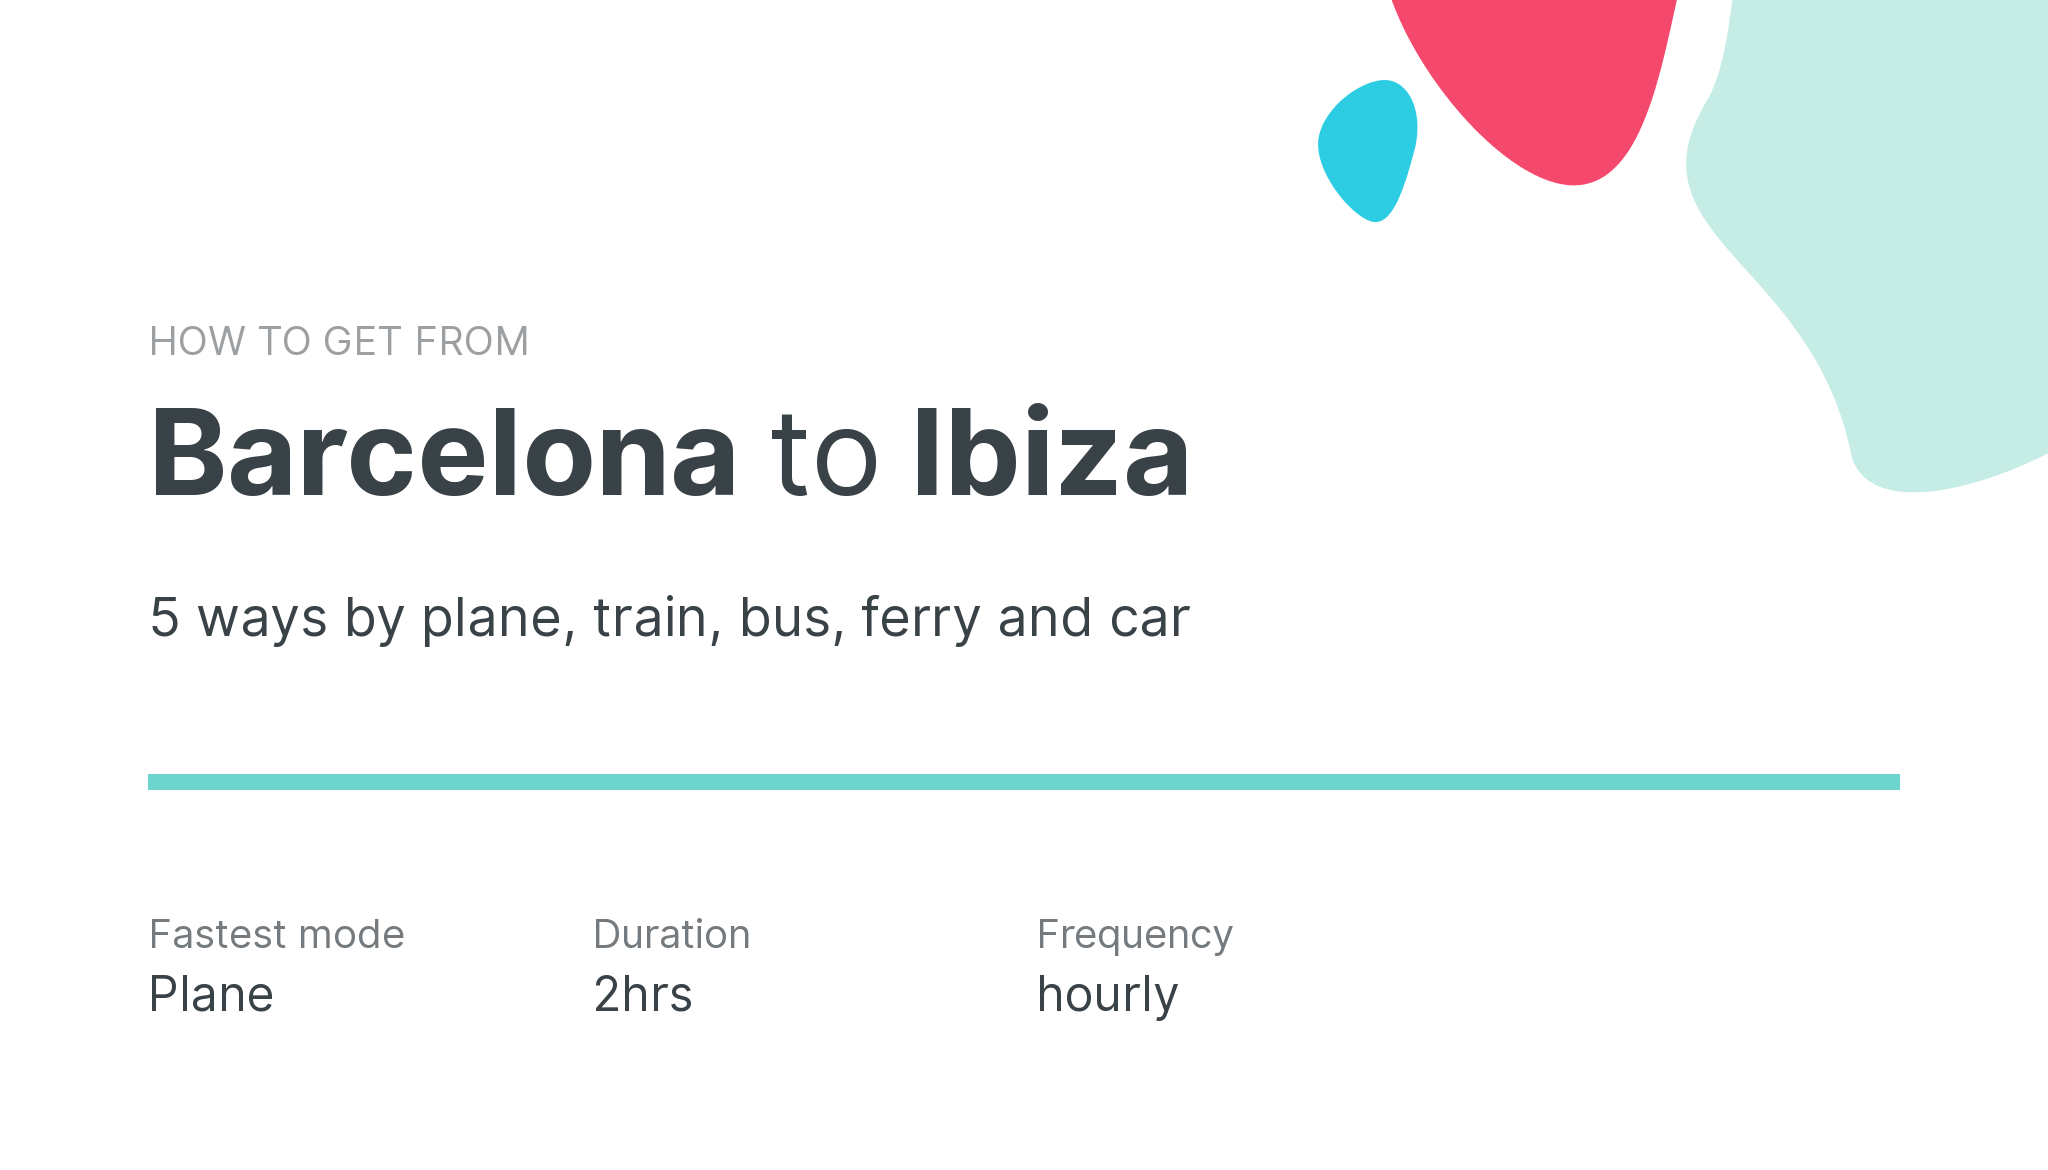 How do I get from Barcelona to Ibiza